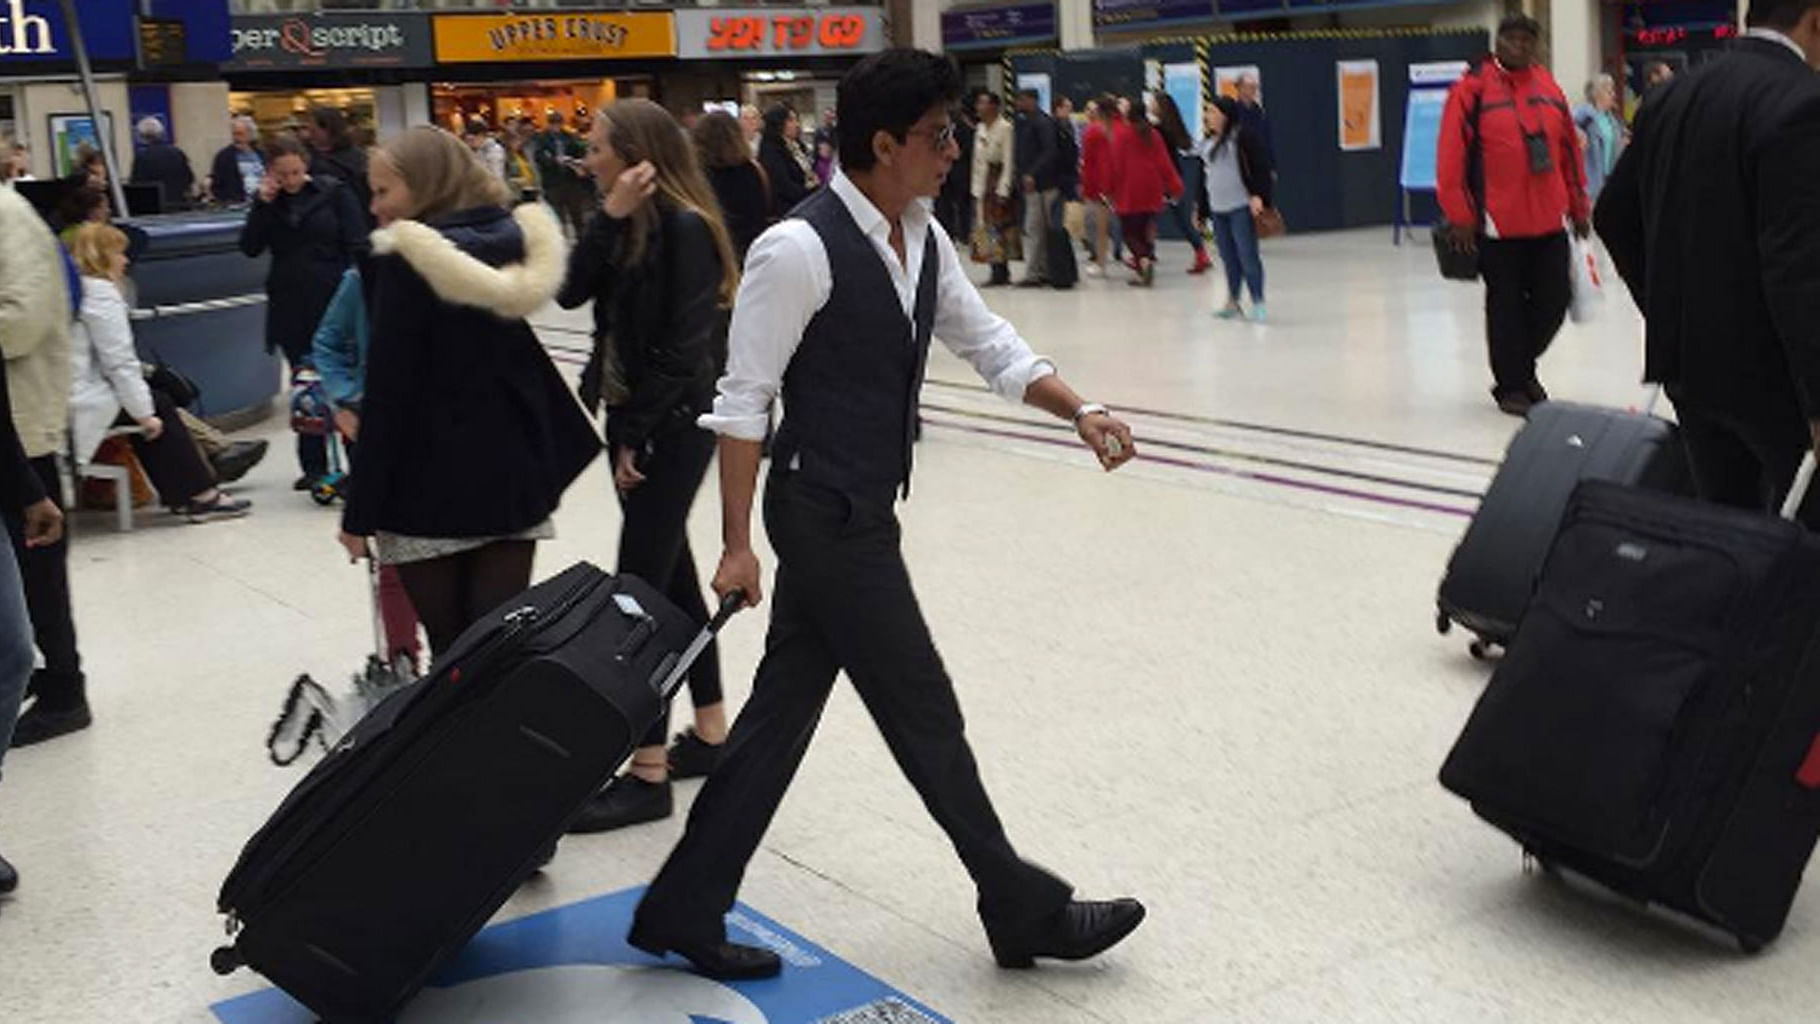 Shah Rukh Khan walks through a London tube station unnoticed (almost) (Photo courtesy: Instagram)